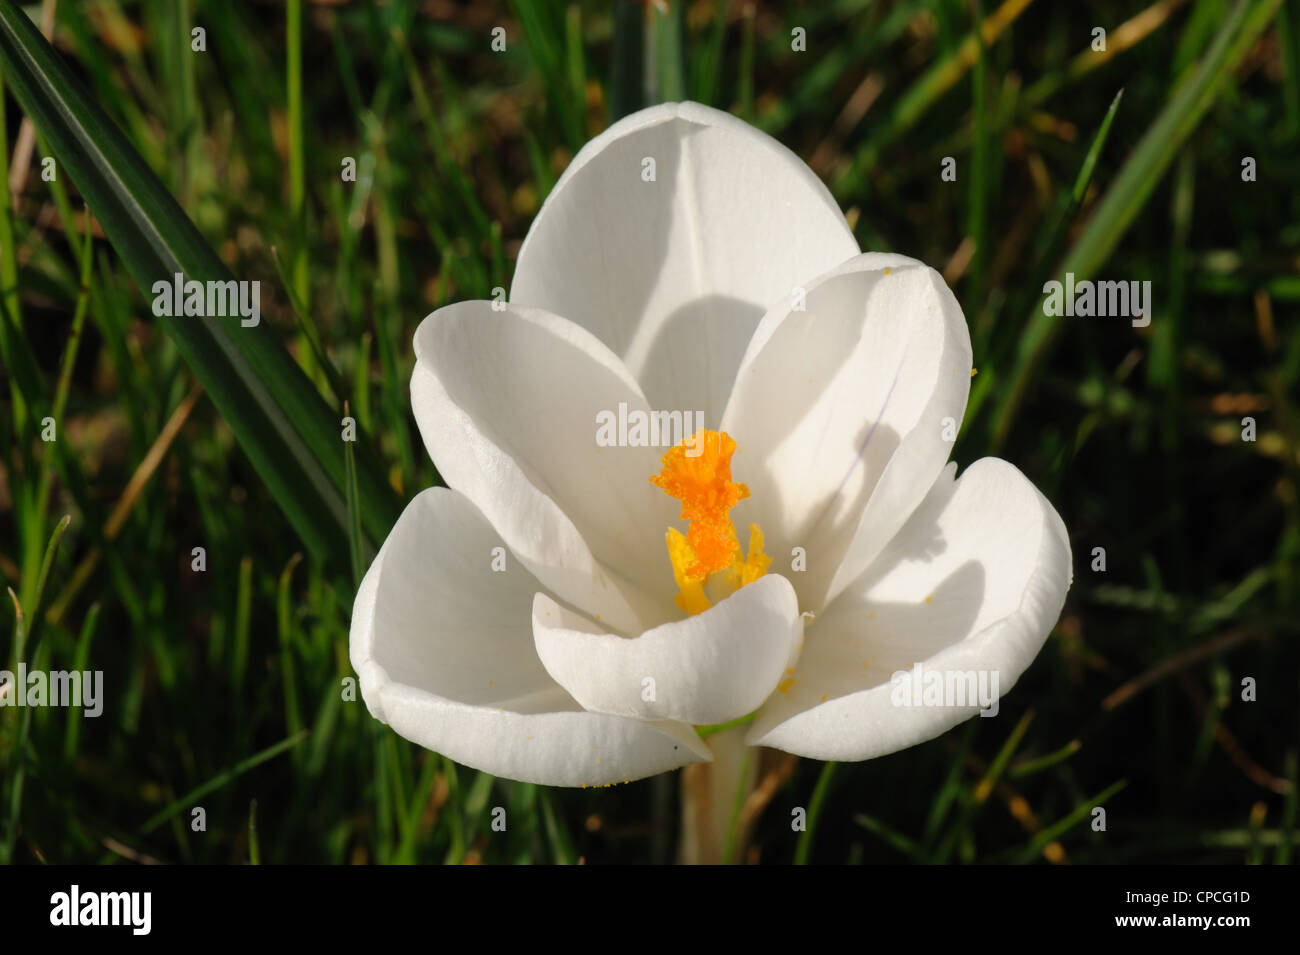 White flowered spring flowering crocus with orange style Stock Photo